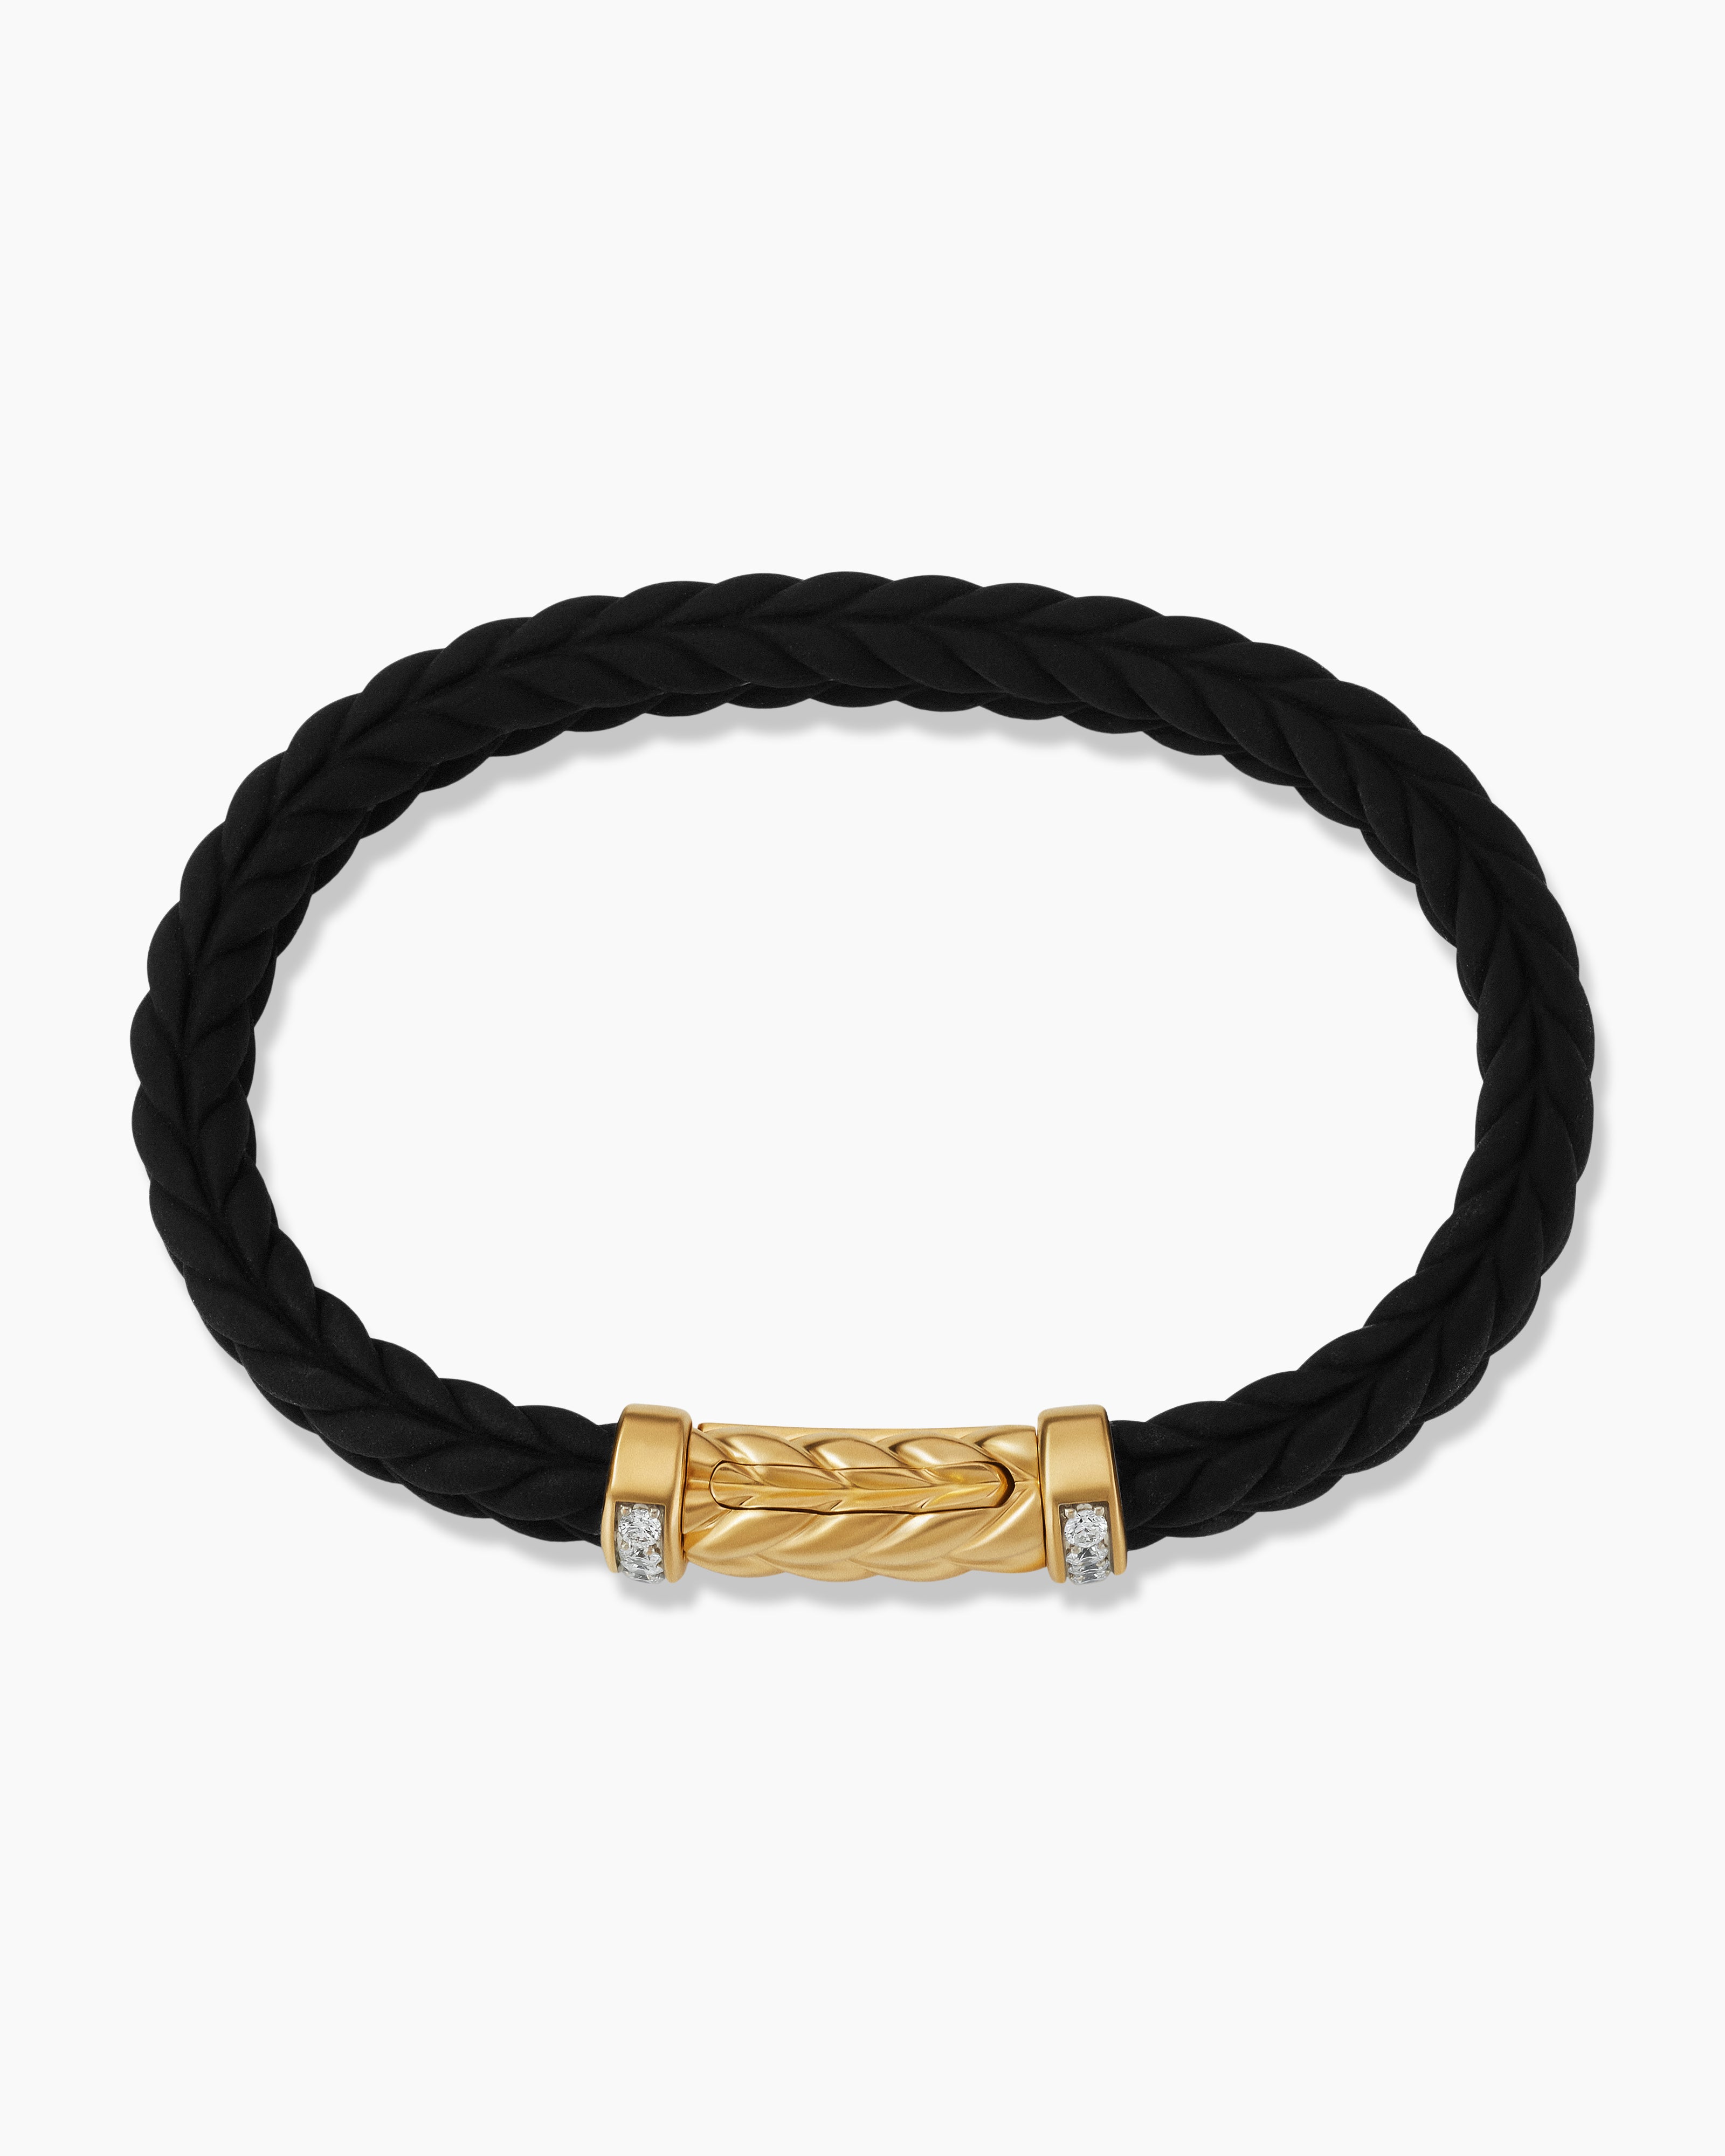 Rubber bracelet - plait, oblong silver and gold tag | Jewelry Eshop